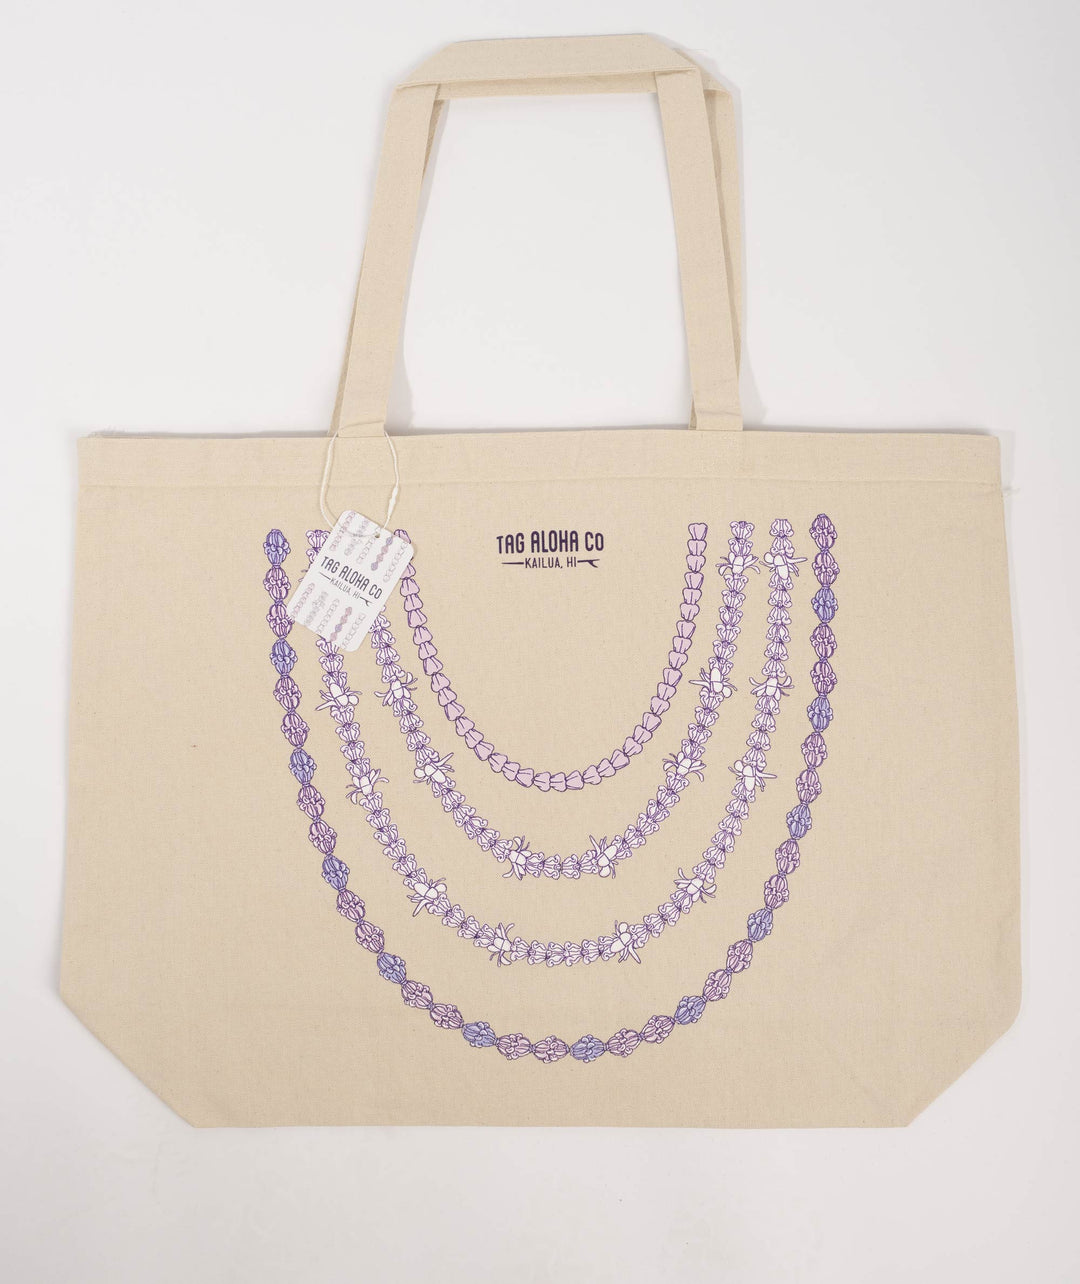 Tag Aloha Co. - Hawaii Inspired Bags & Accessories